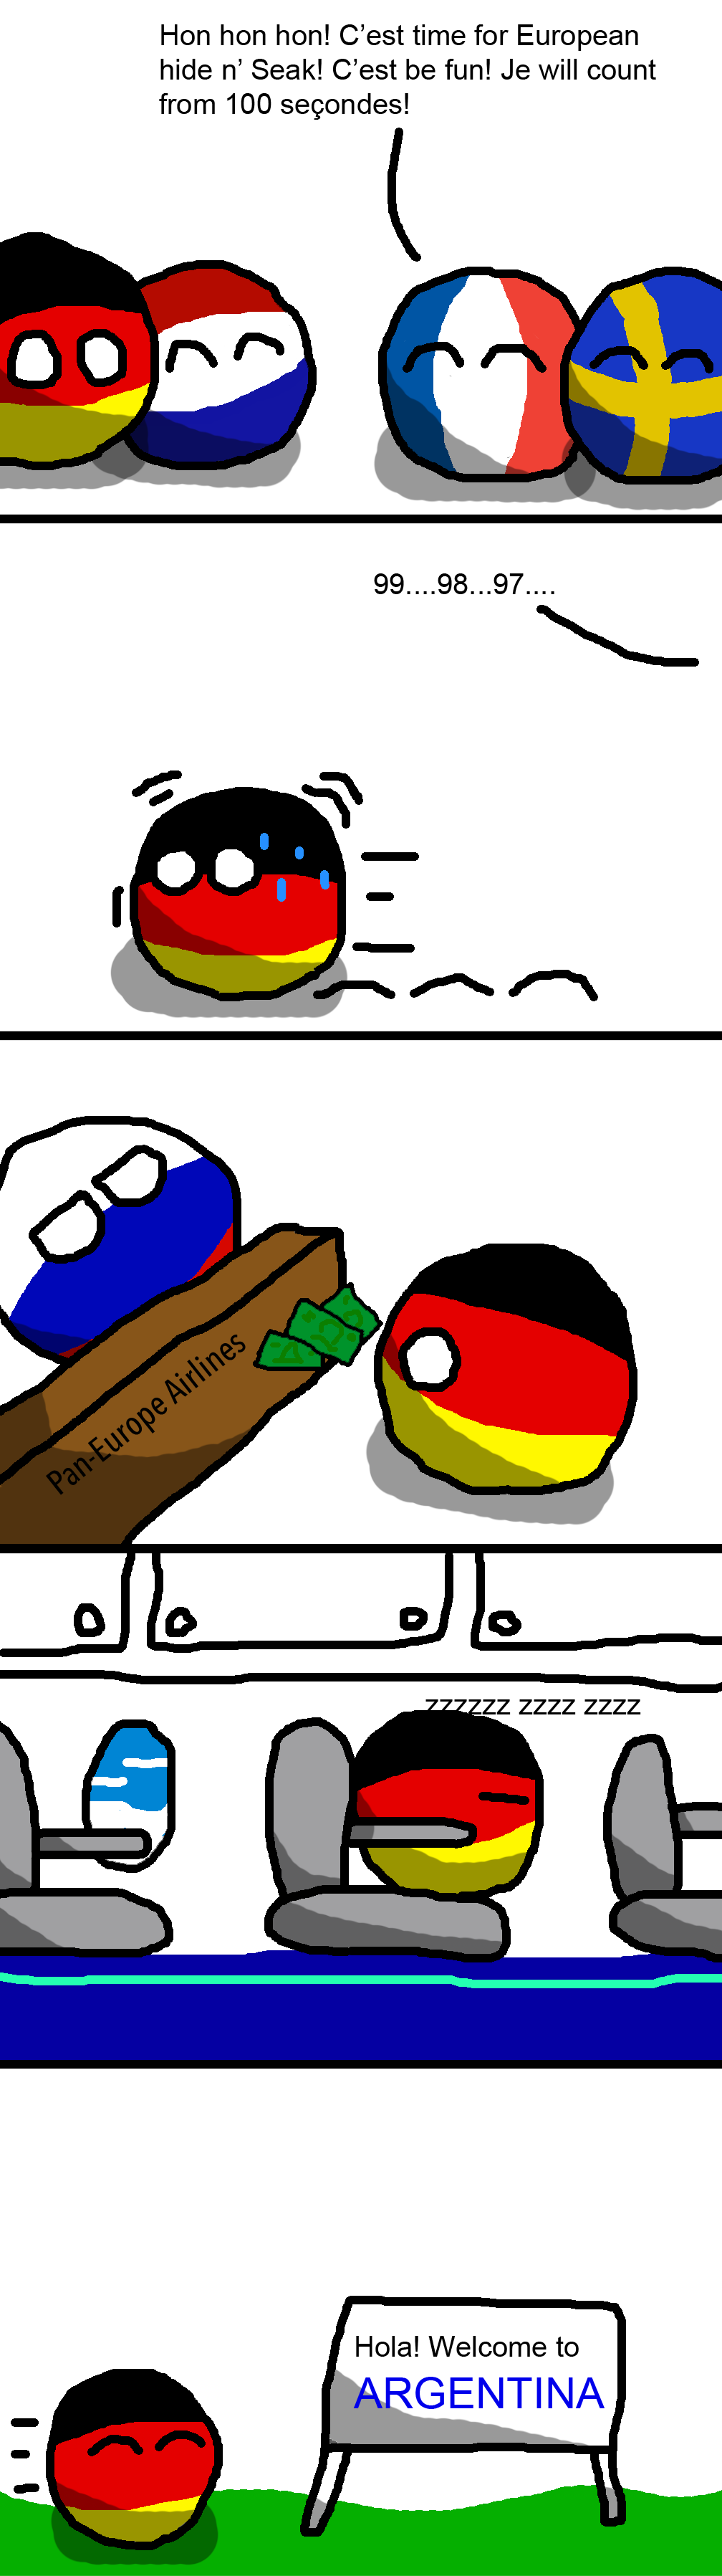 A Classic German Trick